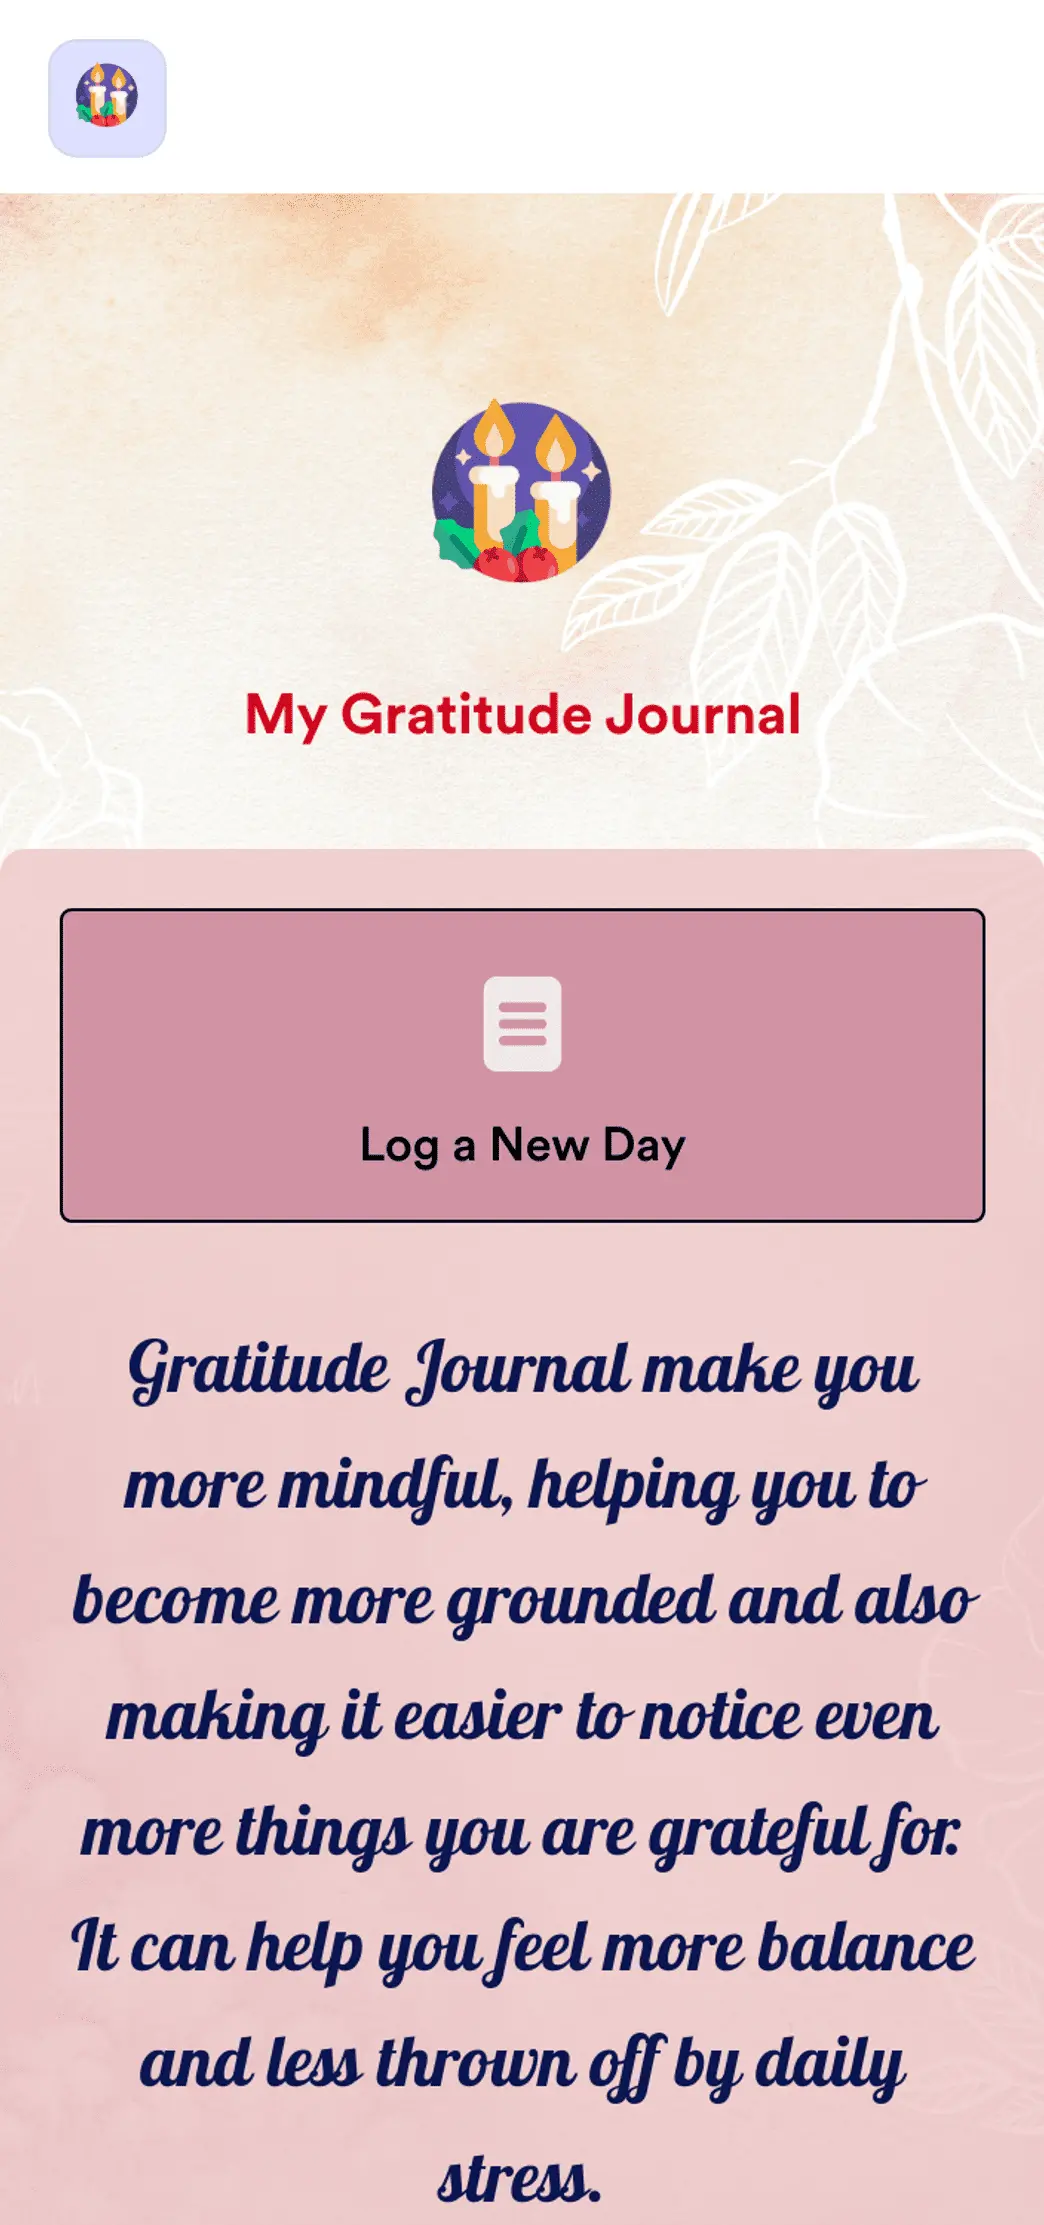 Gratitude Journal App